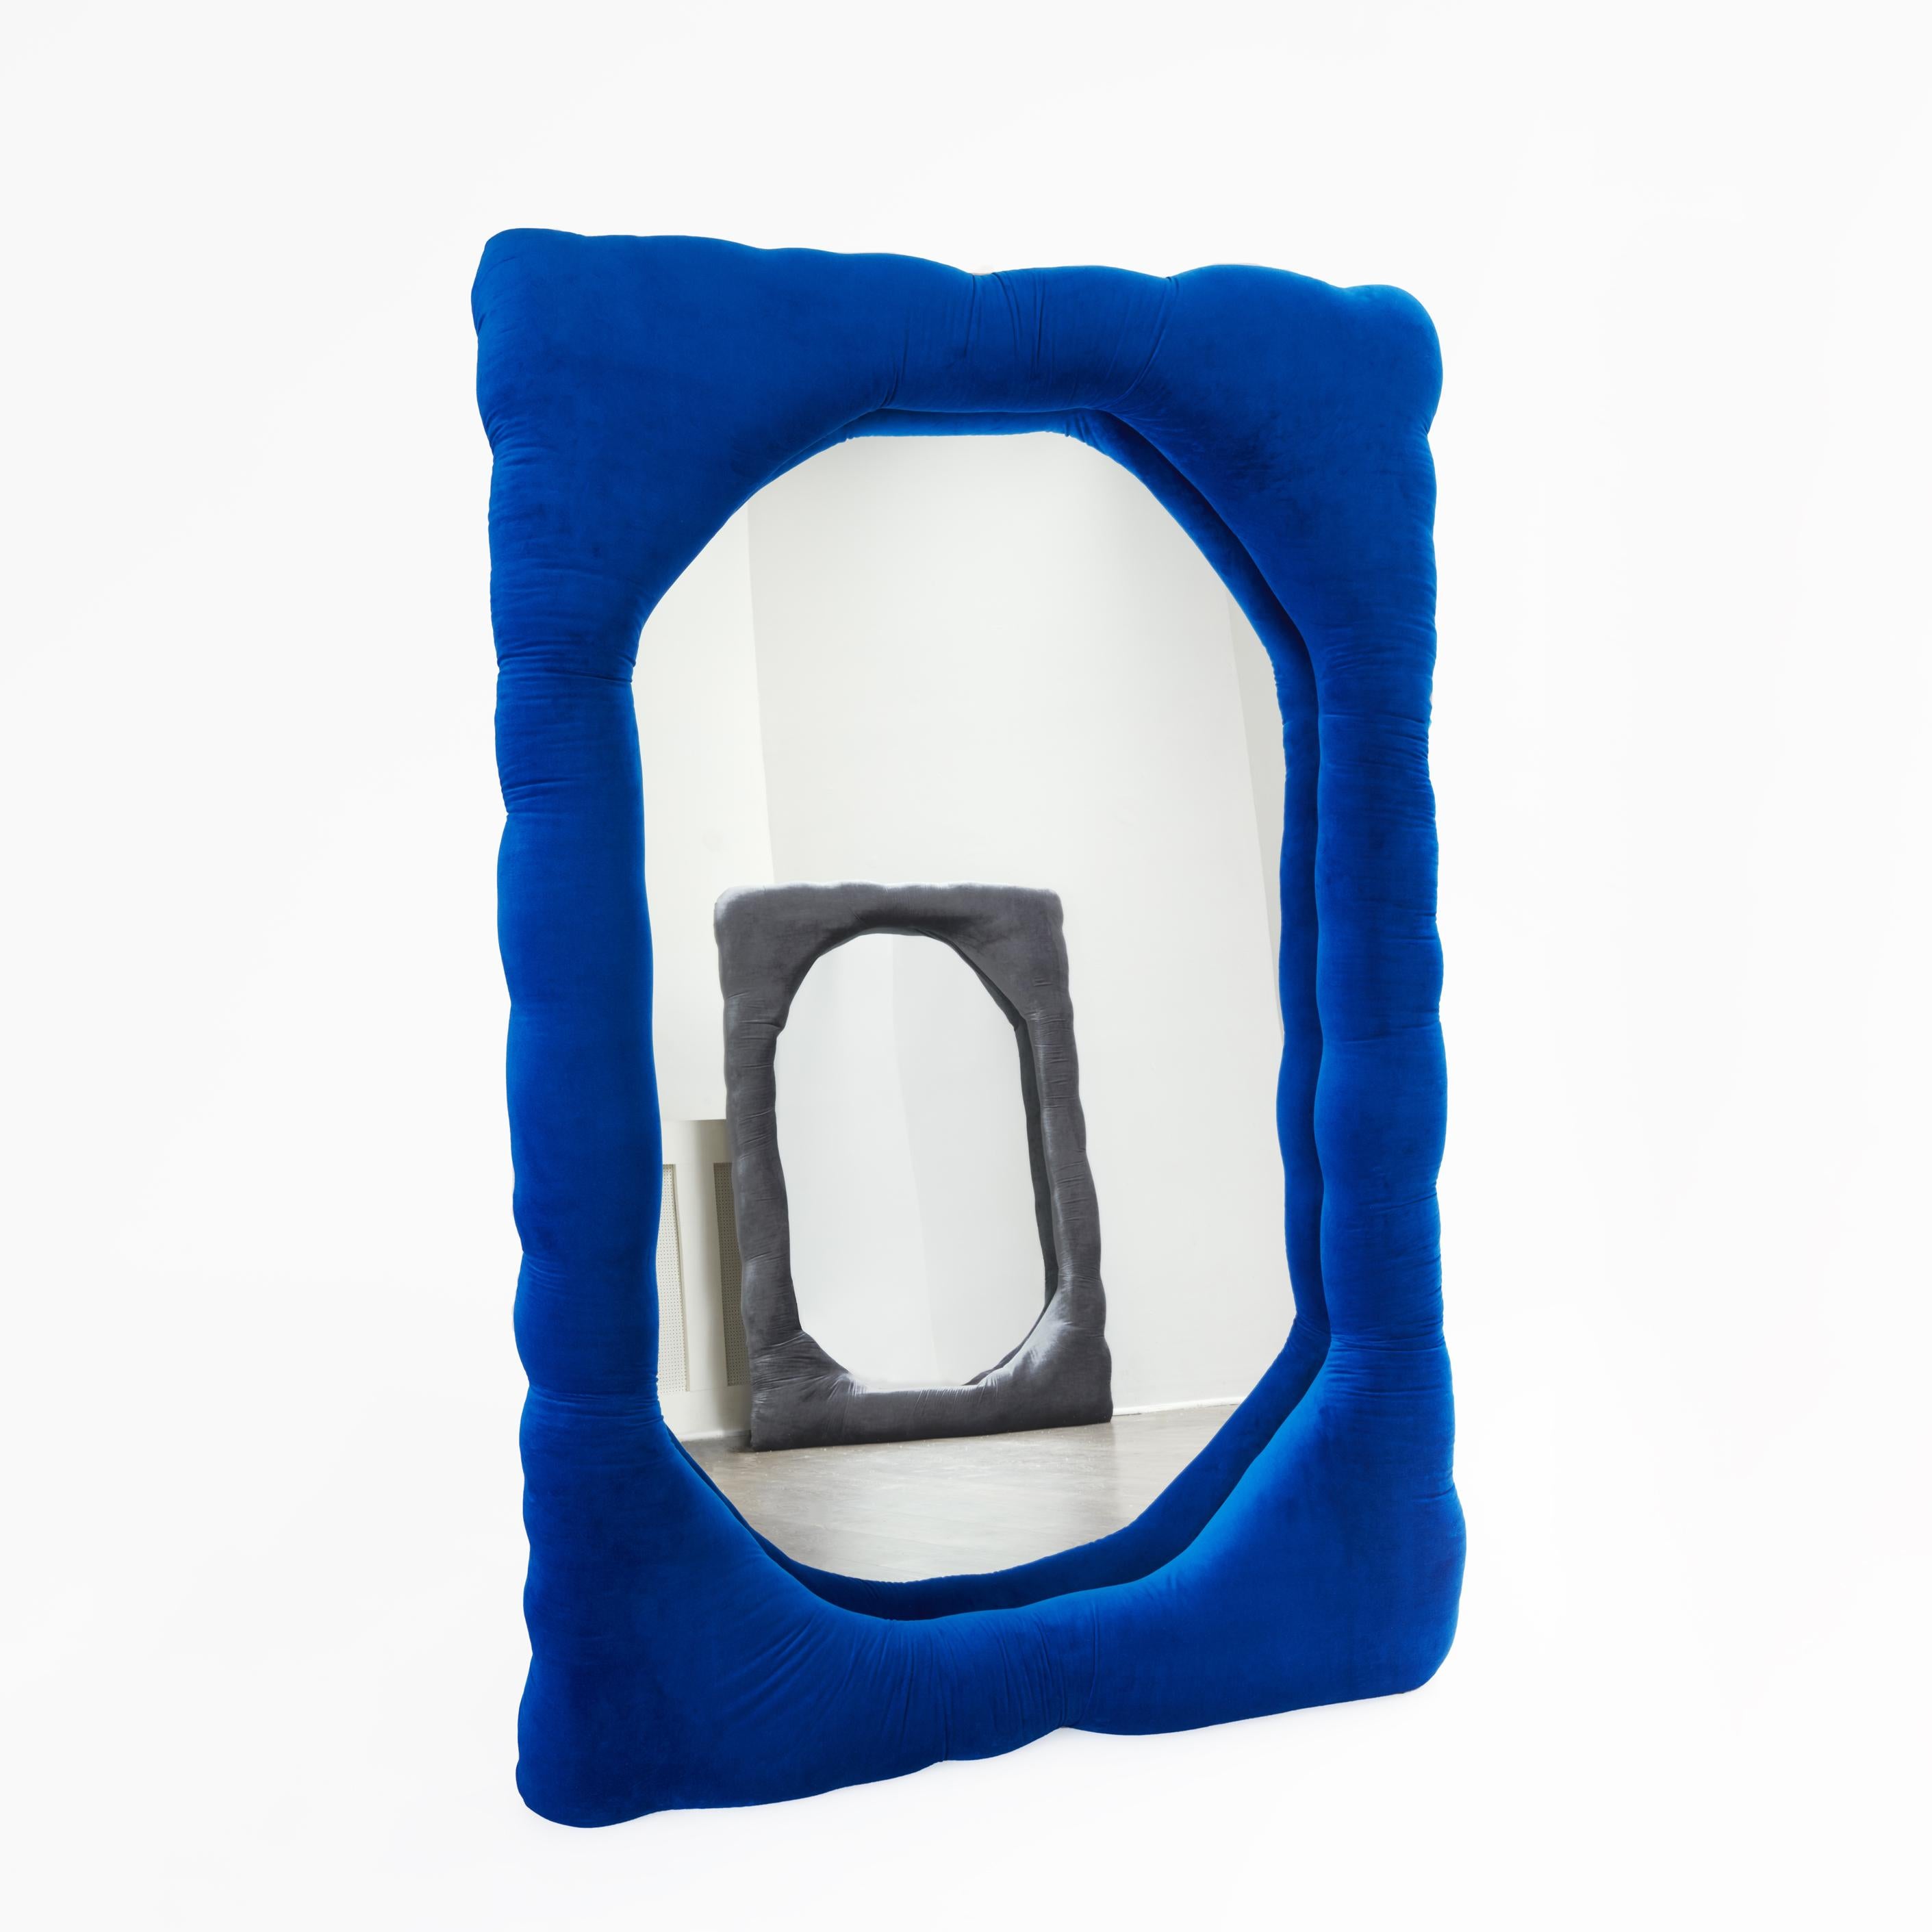 Miroir biomorphique en velours bleu cobalt de Brandi Howe, REP de Tuleste Factory Neuf - En vente à New York, NY